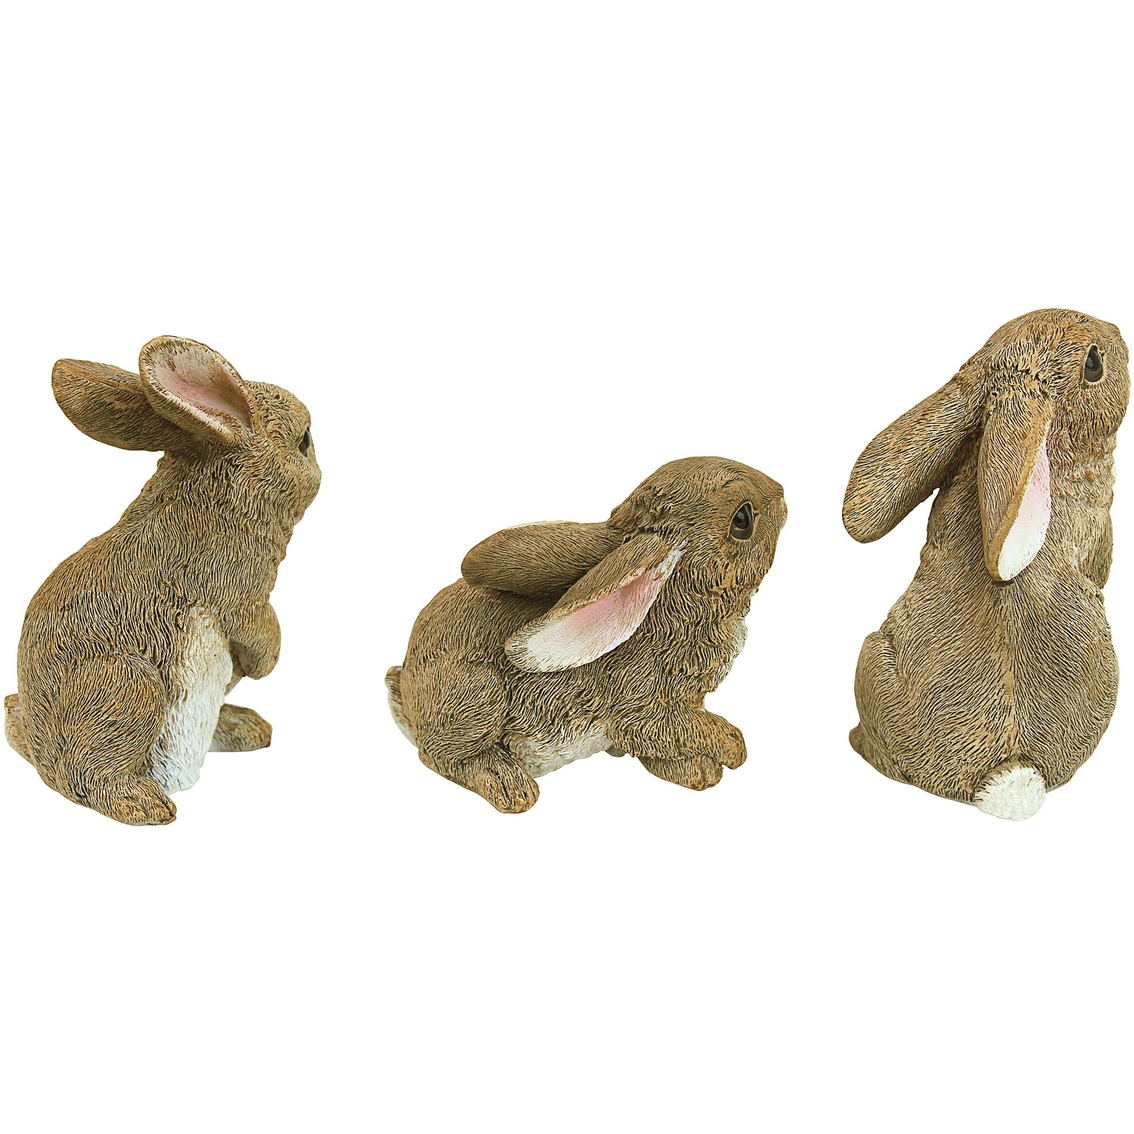 Design Toscano The Bunny Den Garden Rabbit Statues - Image 2 of 4